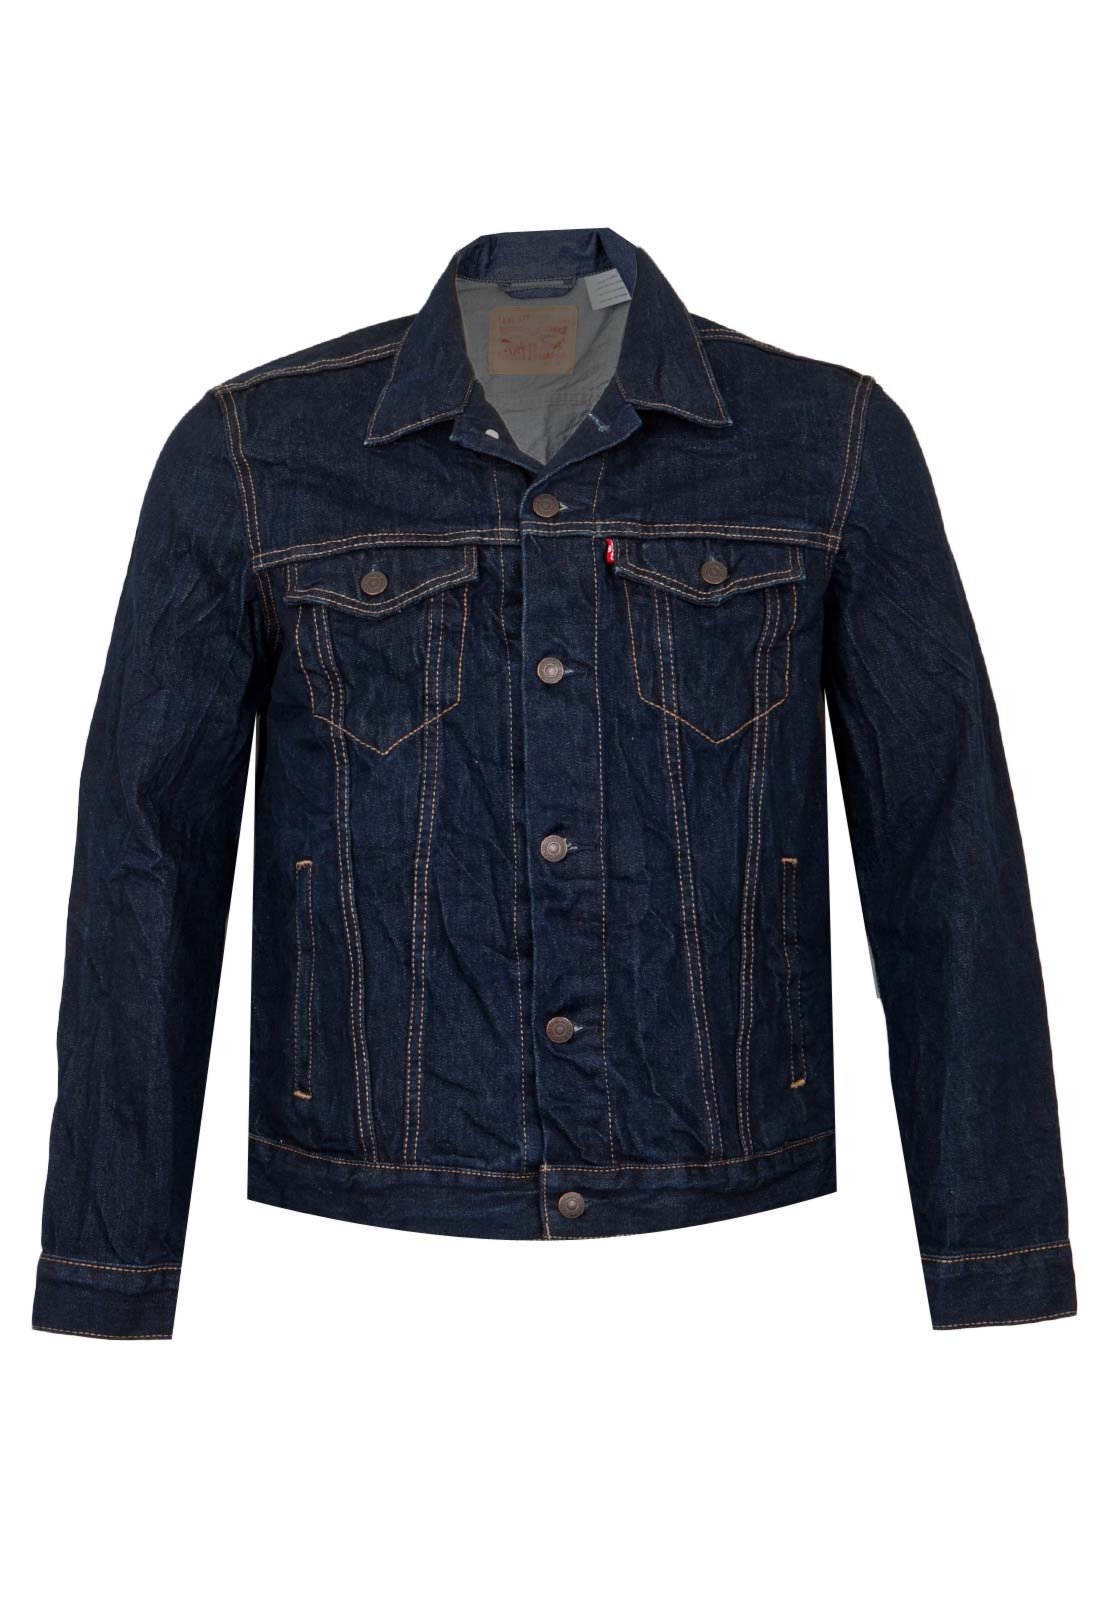 jaqueta jeans masculina levis preço